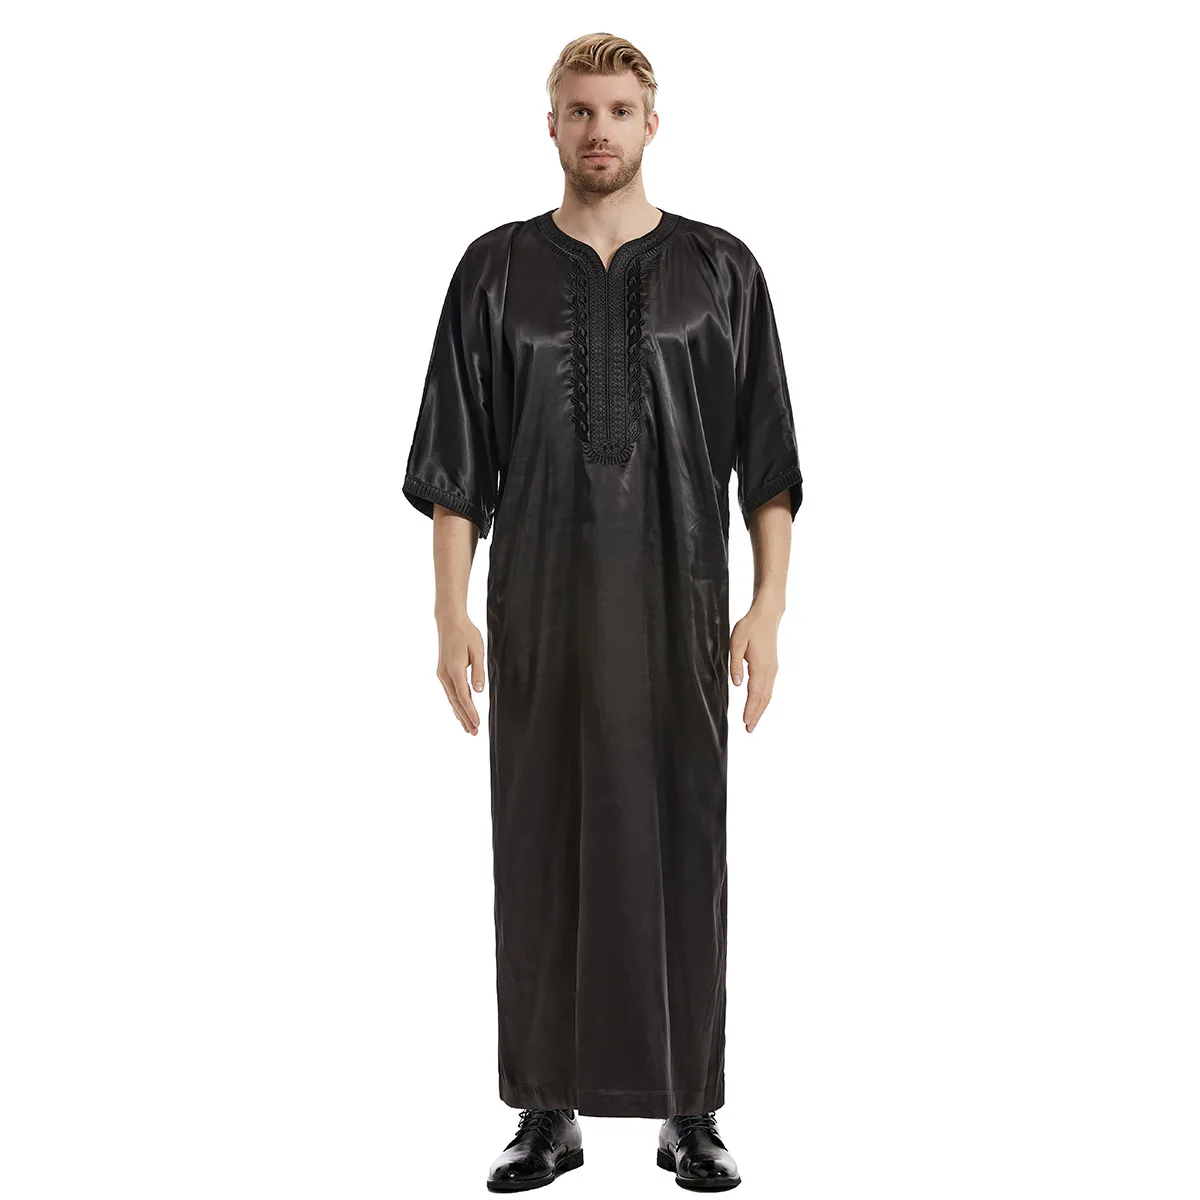 Muslim Men Clothing Abaya Islam Musulmane Pour Homme Kaftan Leisure Jubb Moroccan Thobe Saudi Arabia Pakistan Dubai Islamic Robe